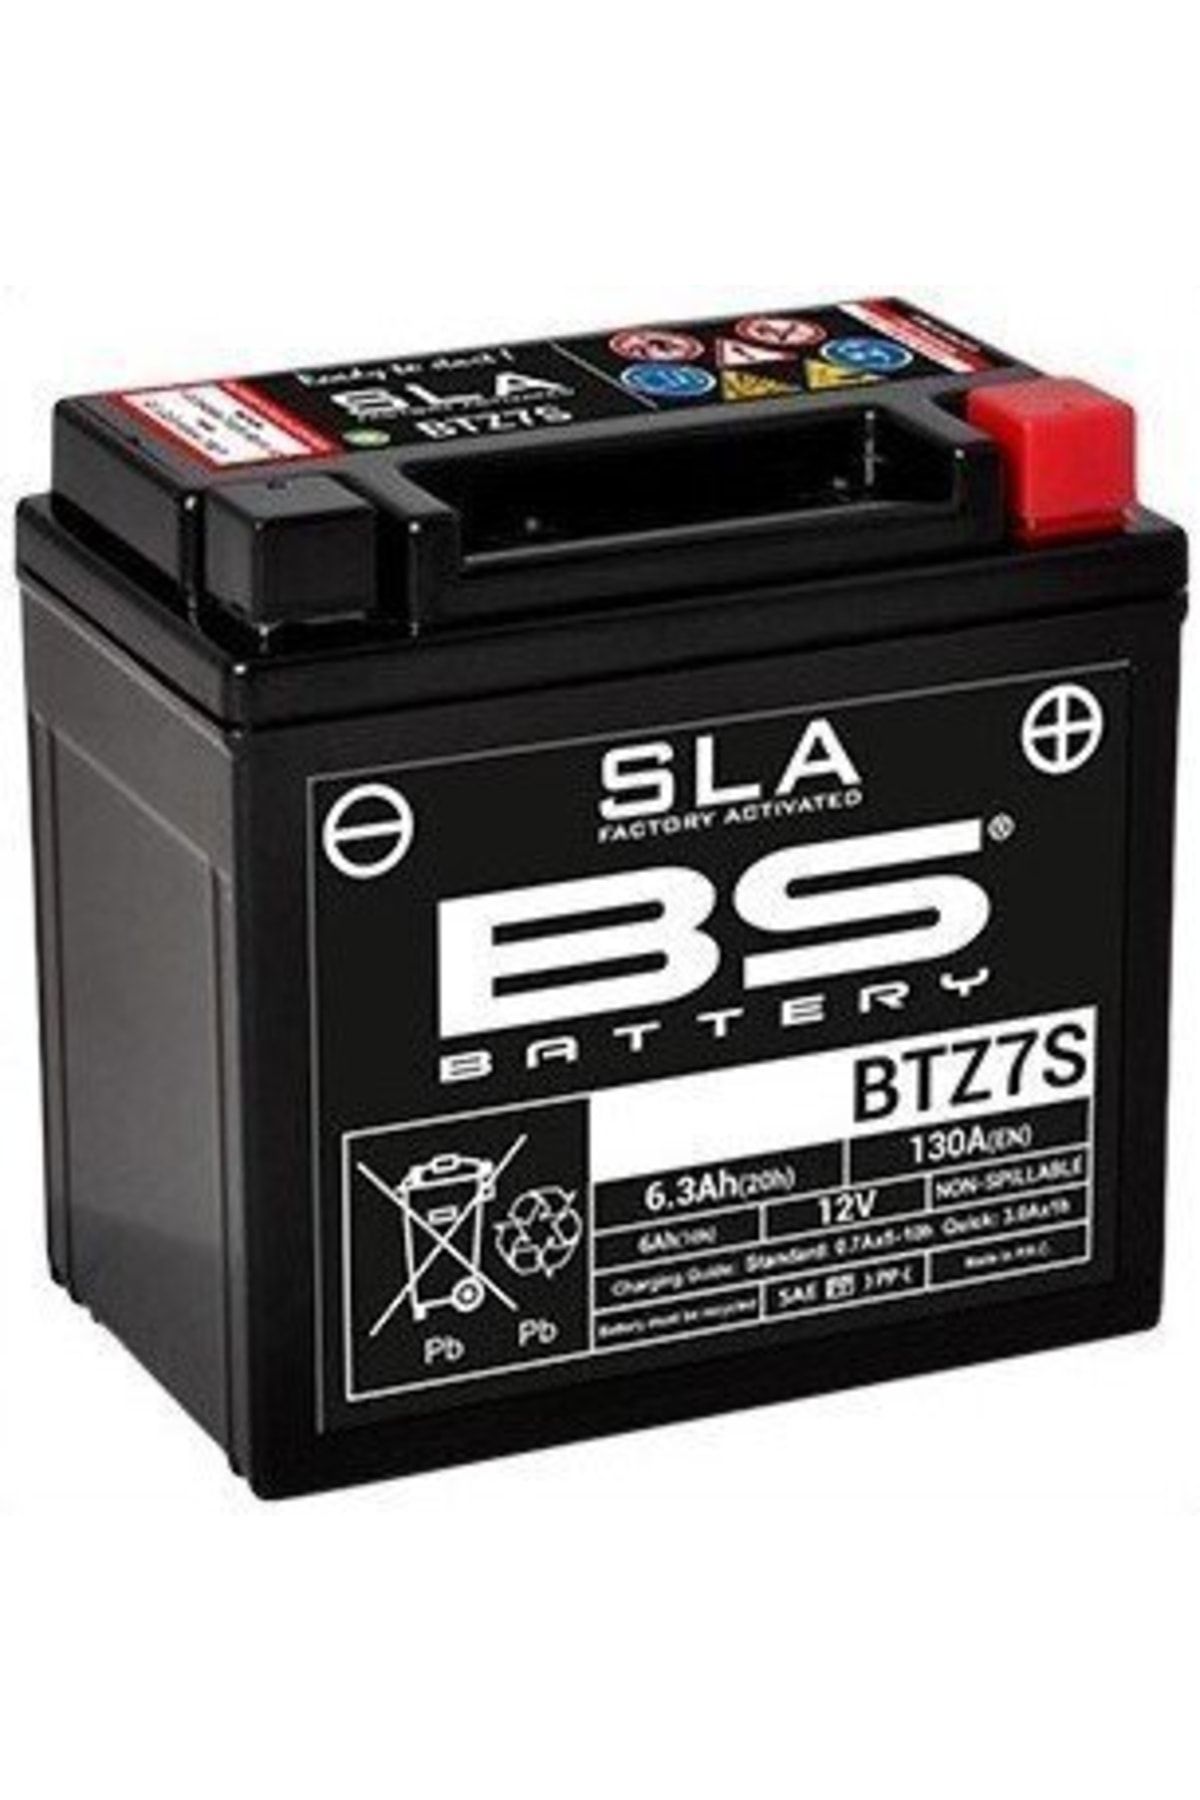 Bs battery. Btz7s аккумулятор. Kage аккумулятор ytz7s. Ytz14s. BS Battery аккумулятор.